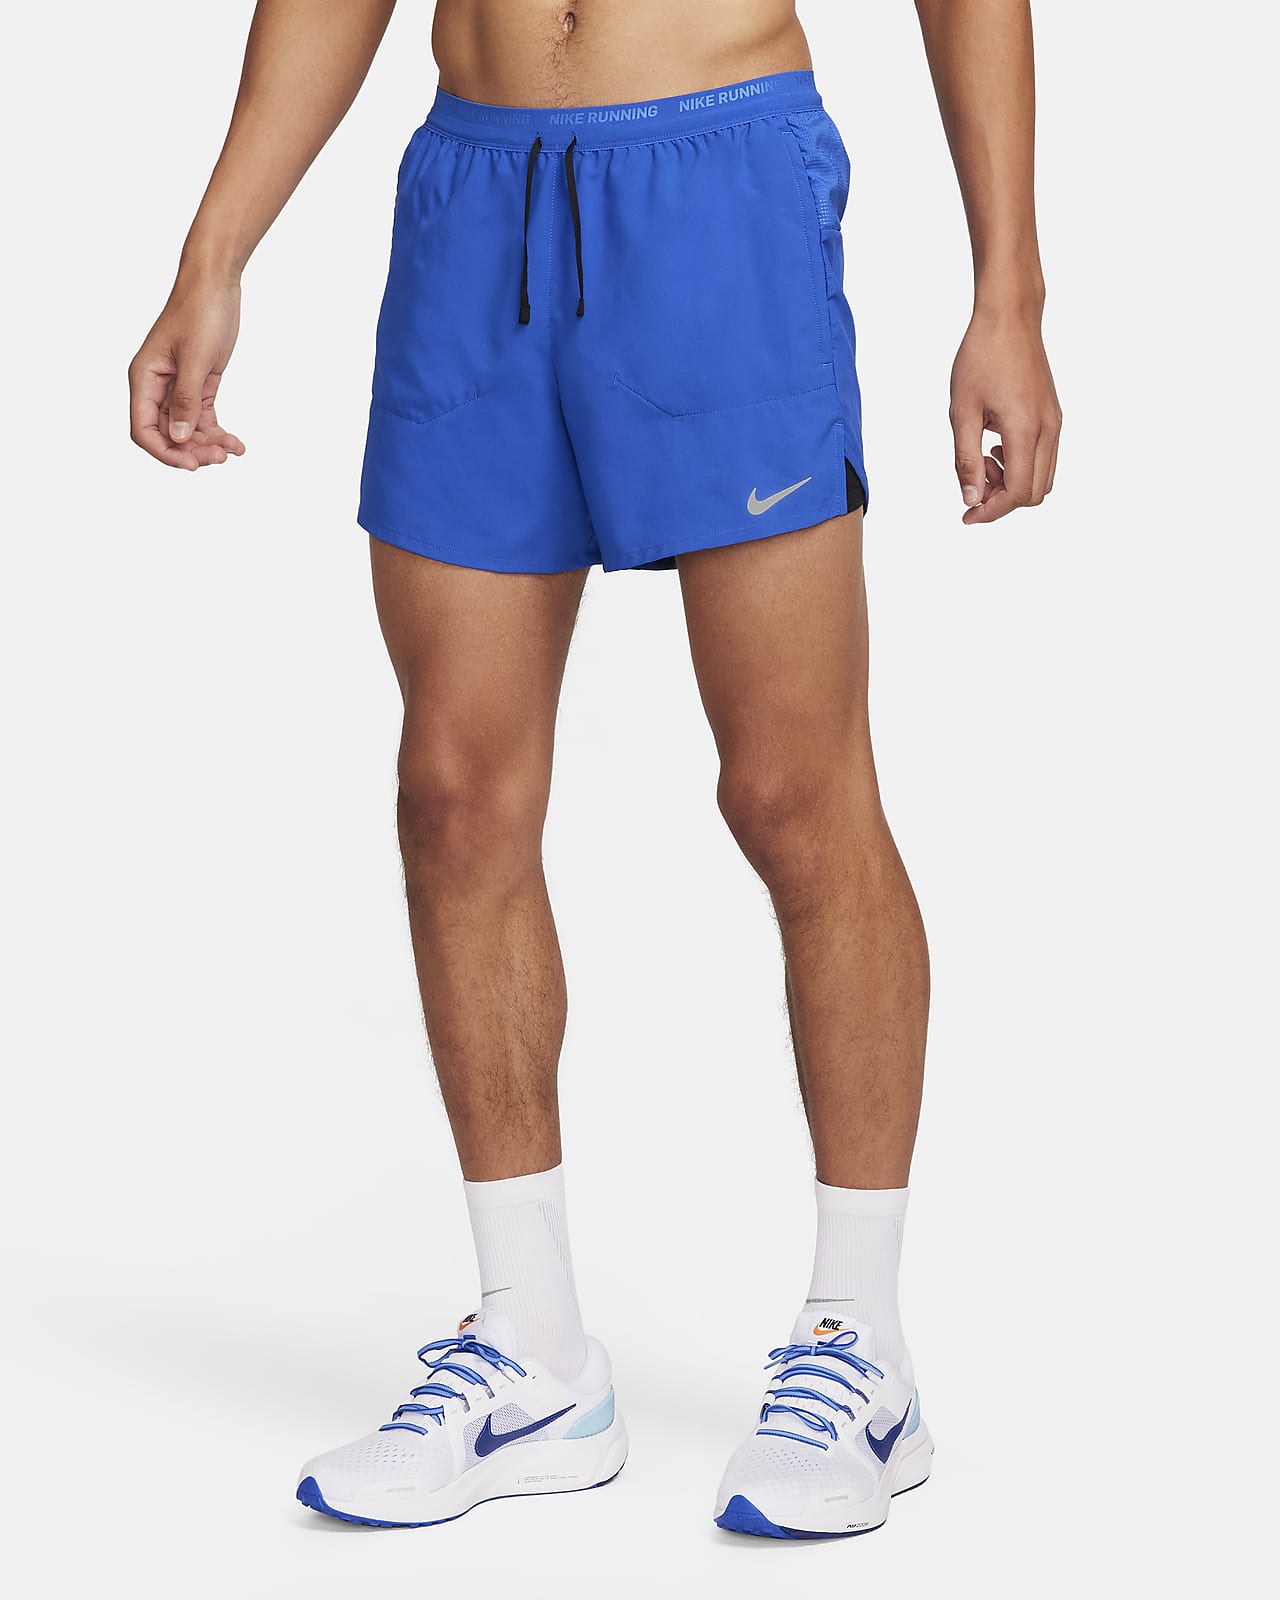 Shorts de running Dri-FIT de 13 cm 2 en 1 para hombre Nike Stride